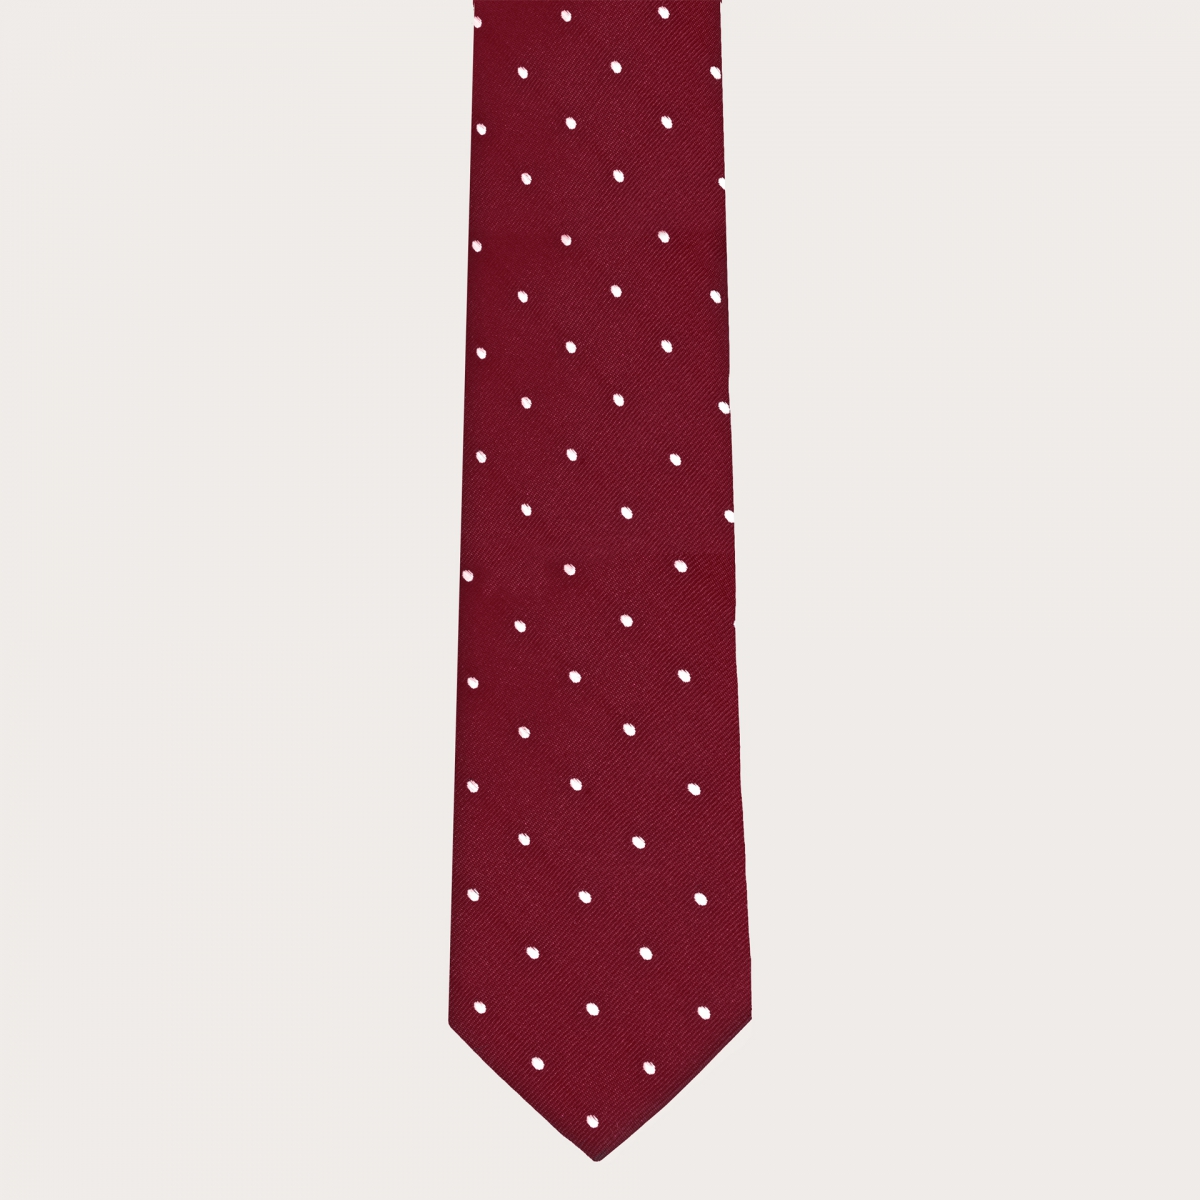 BRUCLE Coordinato bretelle e cravatta in seta jacquard, bordeaux a pois